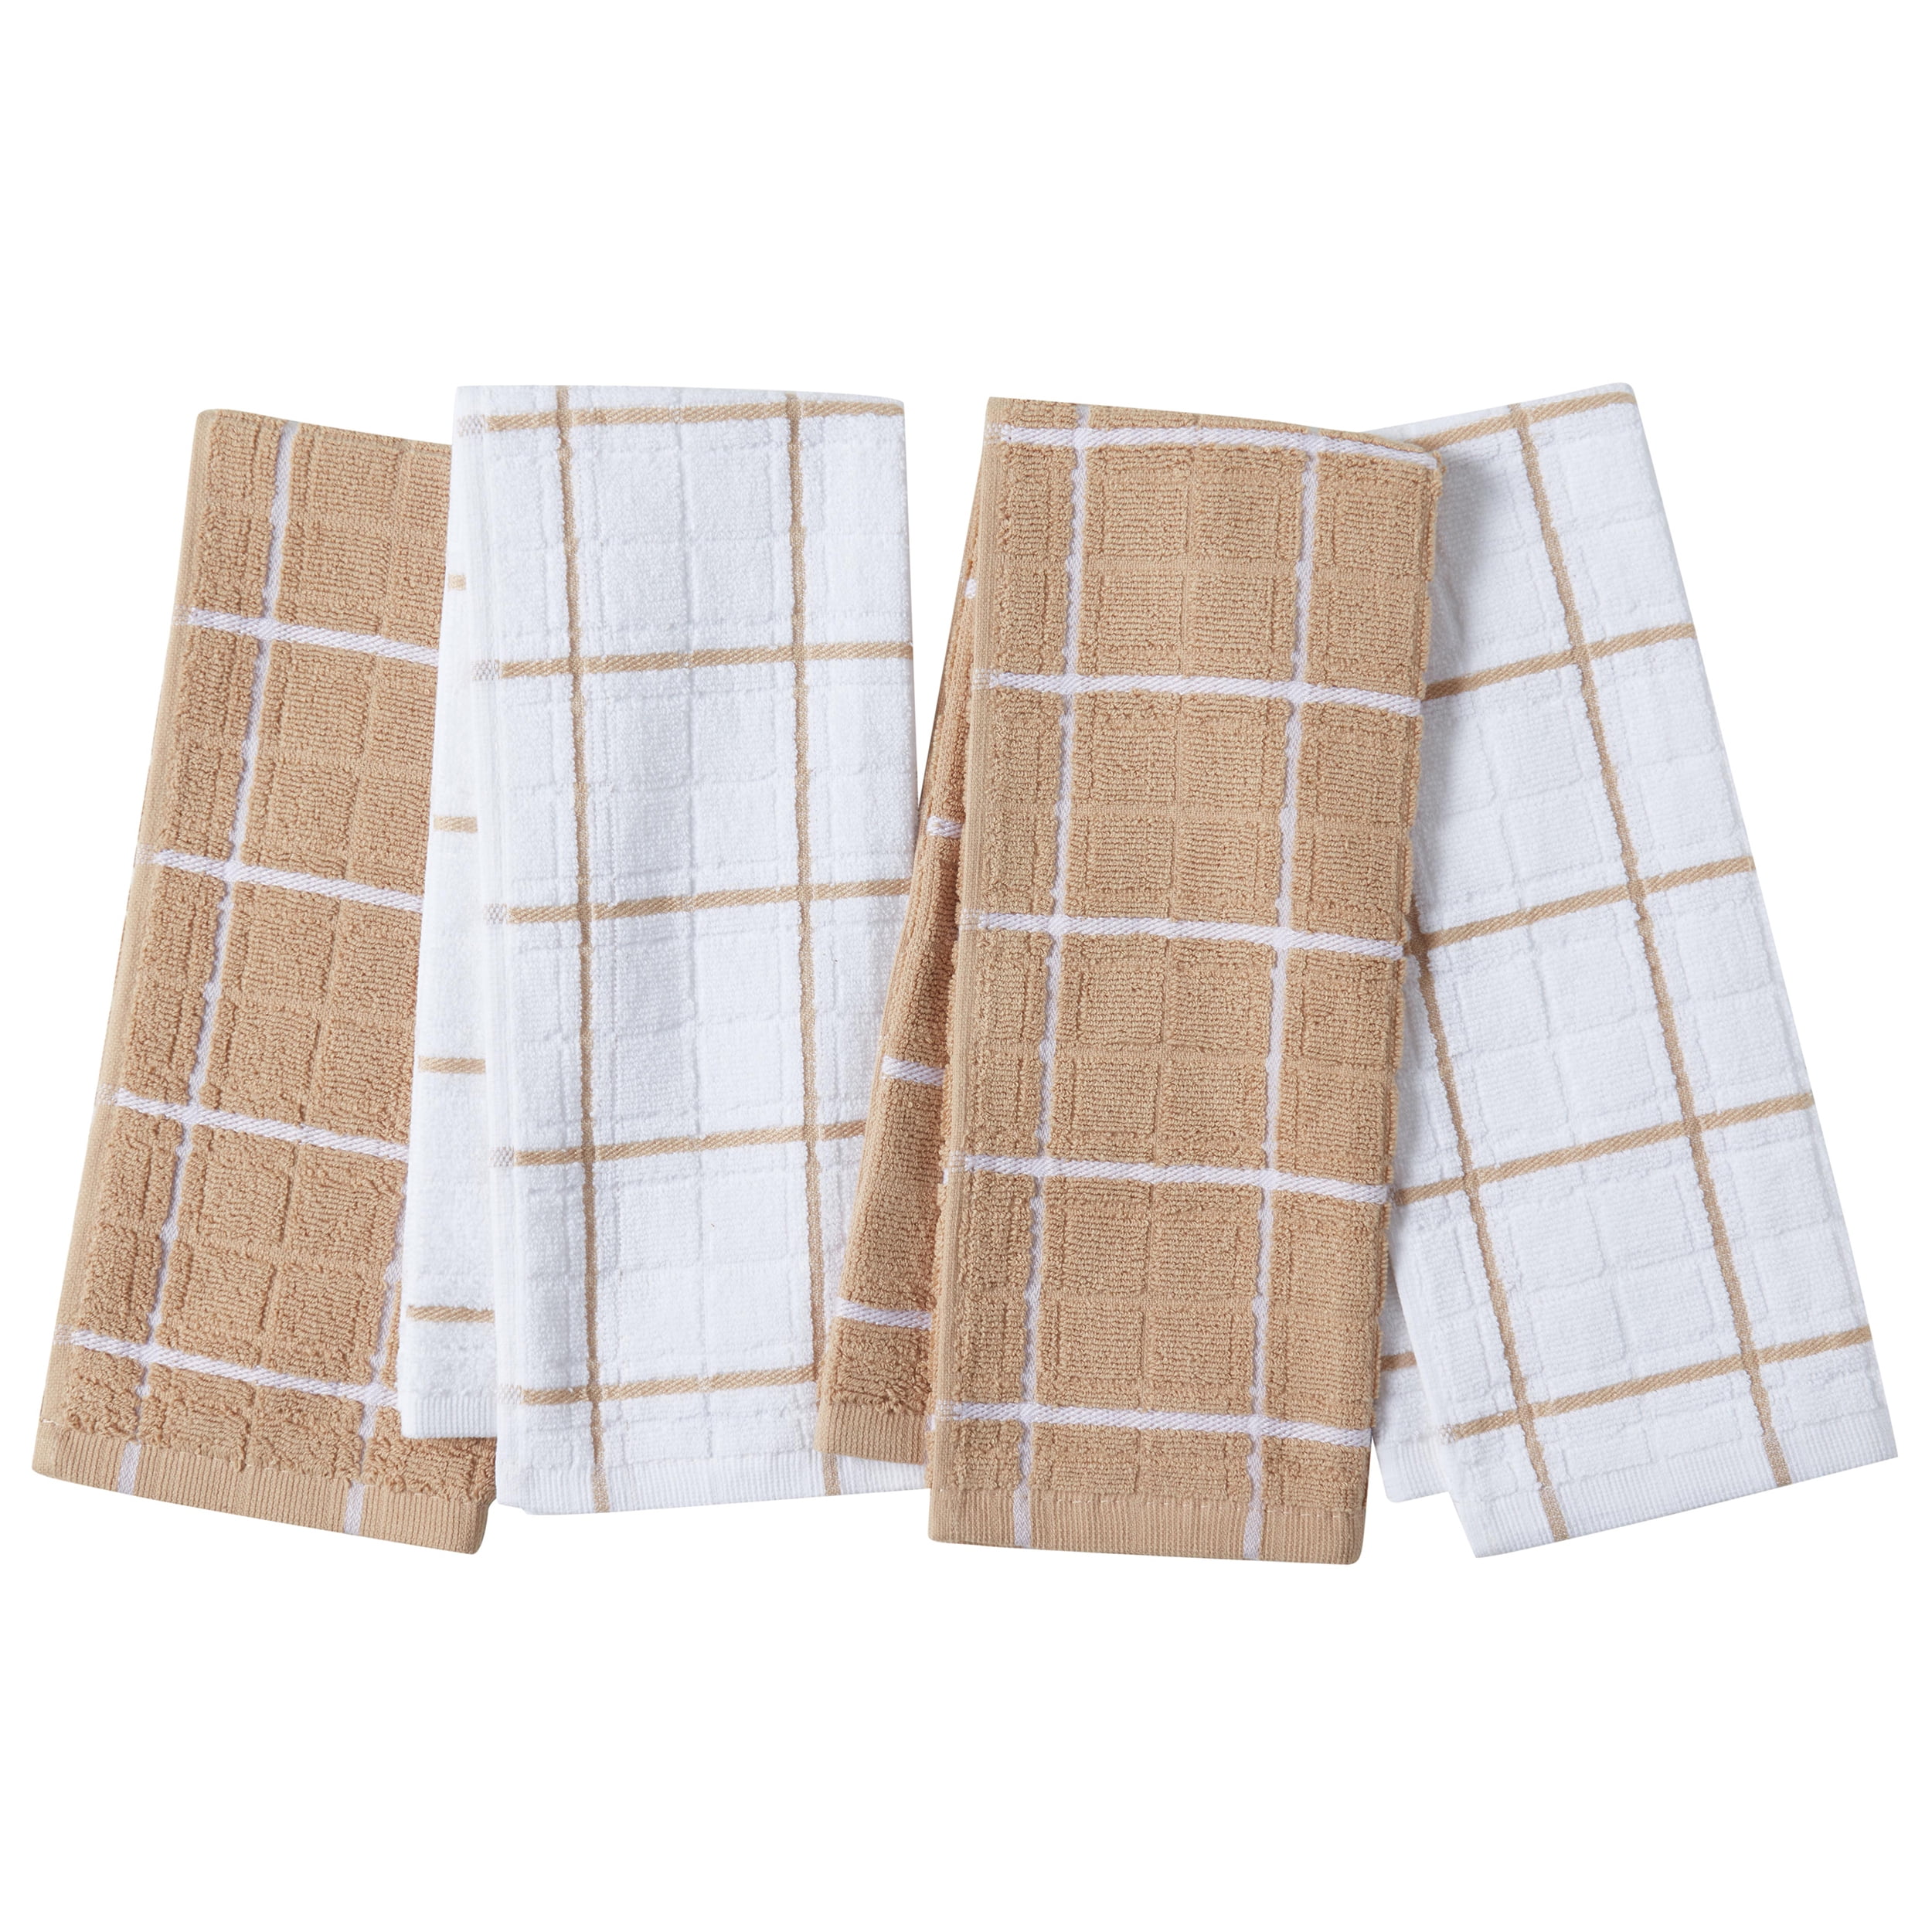 Linen Kitchen Towels Cow & Sheep (set of 2) - LINOROOM 100% LINEN